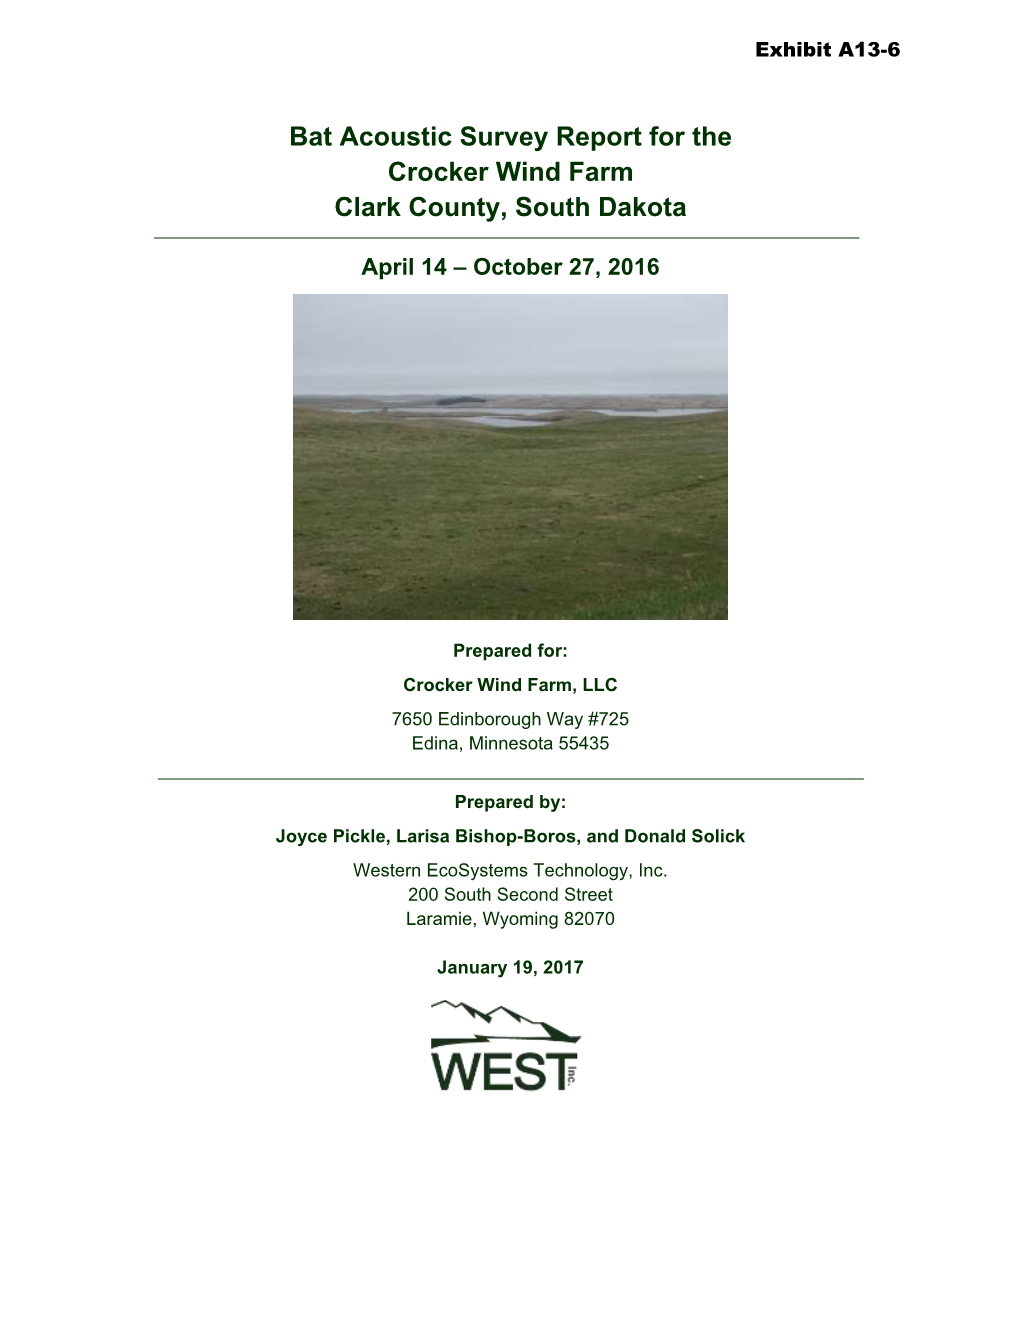 Bat Acoustic Survey Report for the Crocker Wind Farm Clark County, South Dakota